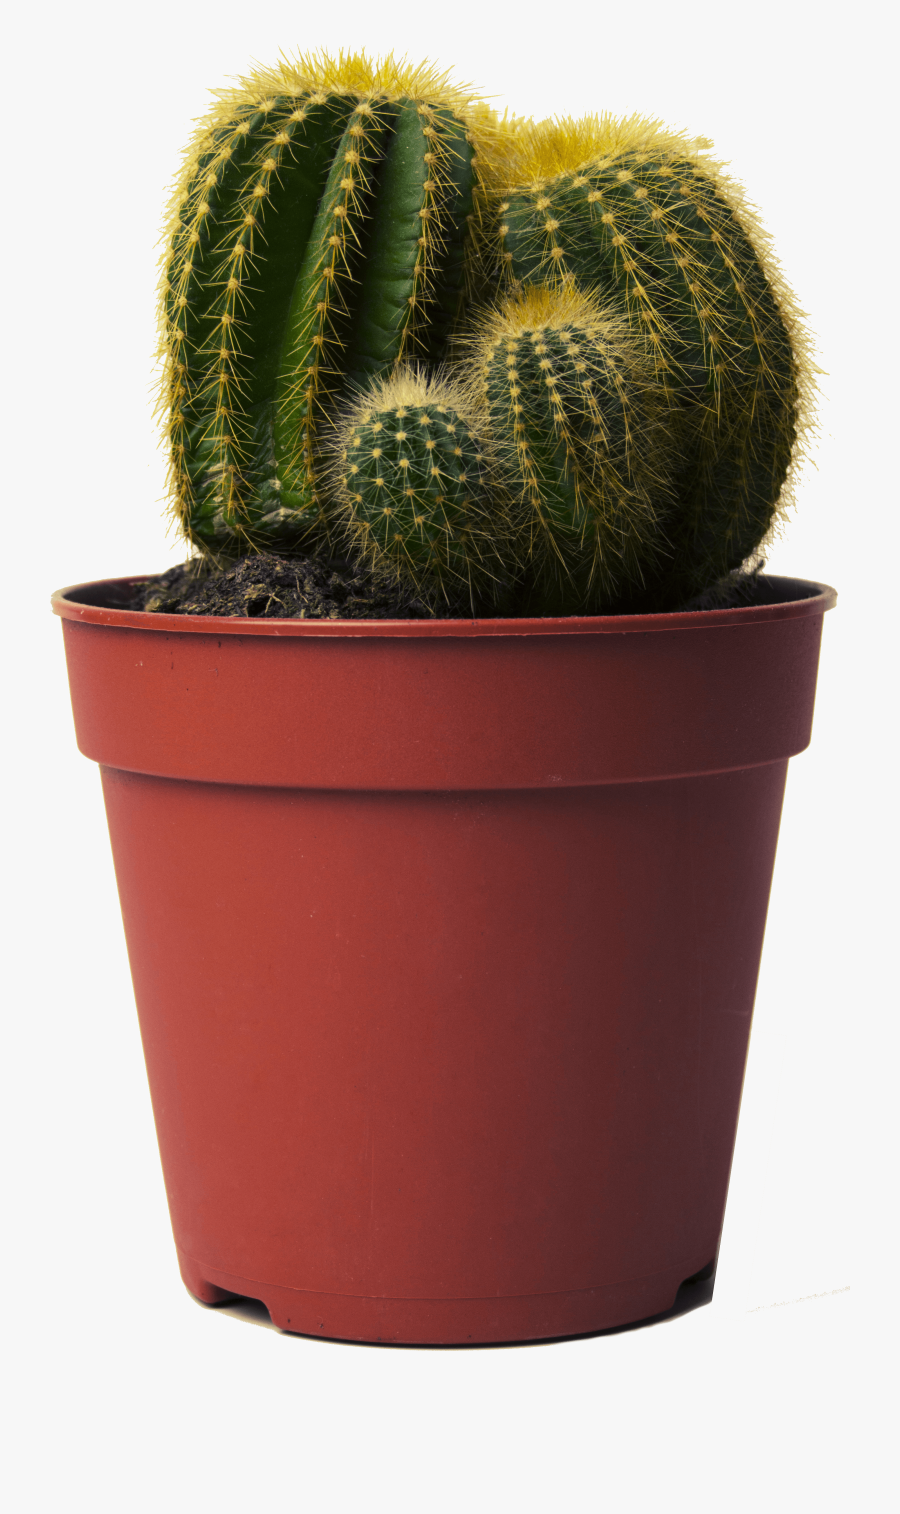 Clip Art Flowering Cacti - Cactus In Pot Png, Transparent Clipart